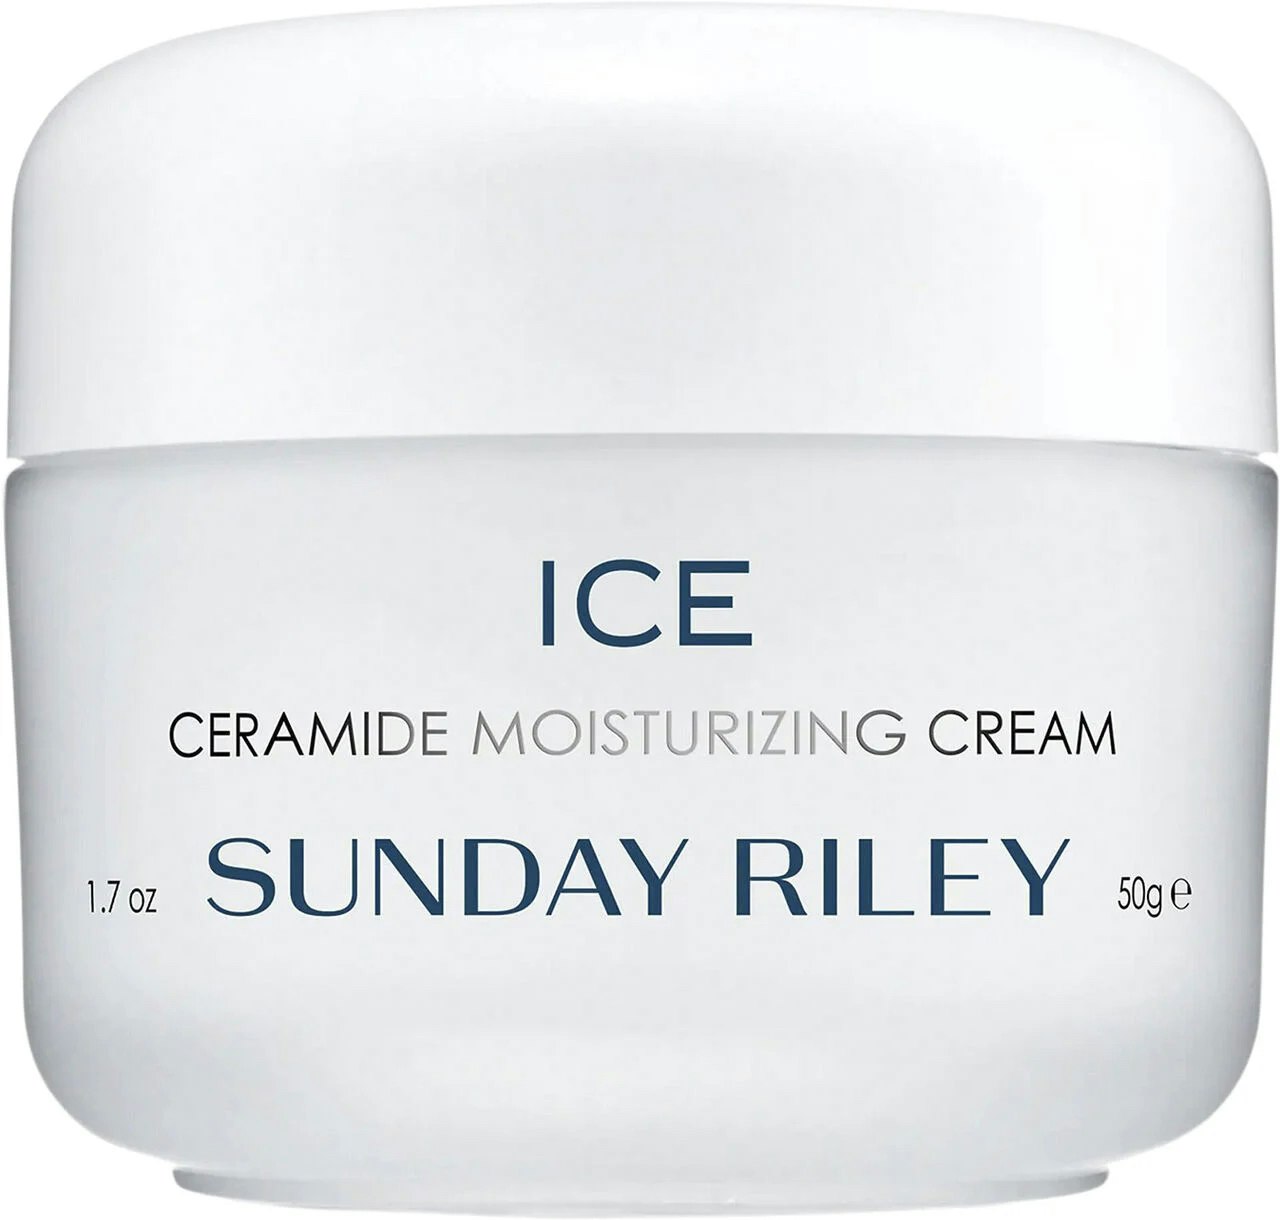 ICE Ceramide Moisturizing Cream – Sunday Riley